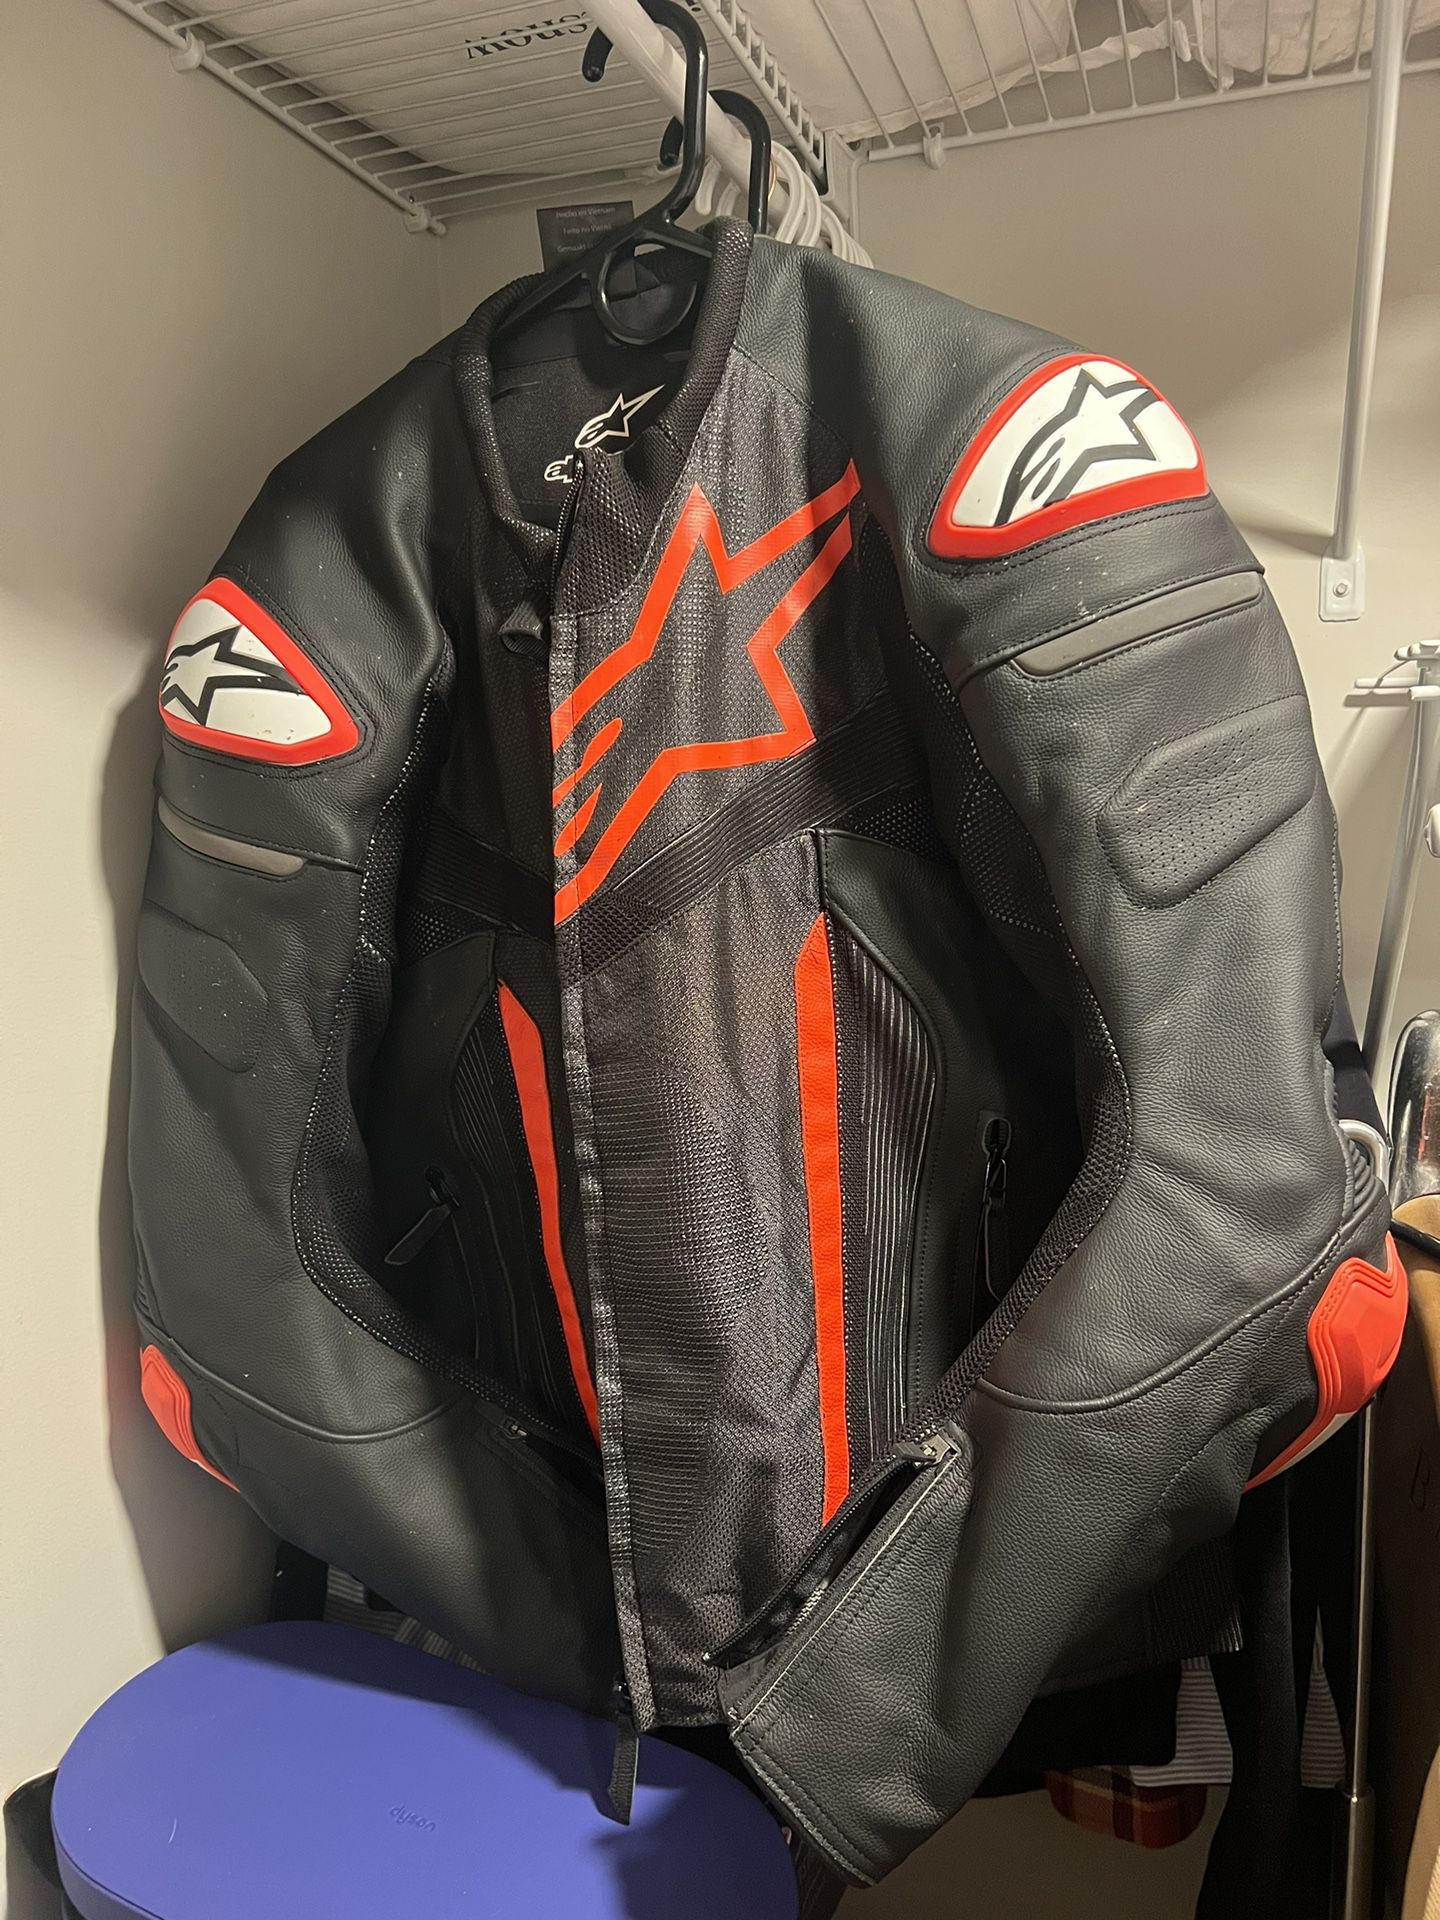 Alpinestar  Fusion motorcycle Leather Jacket 48